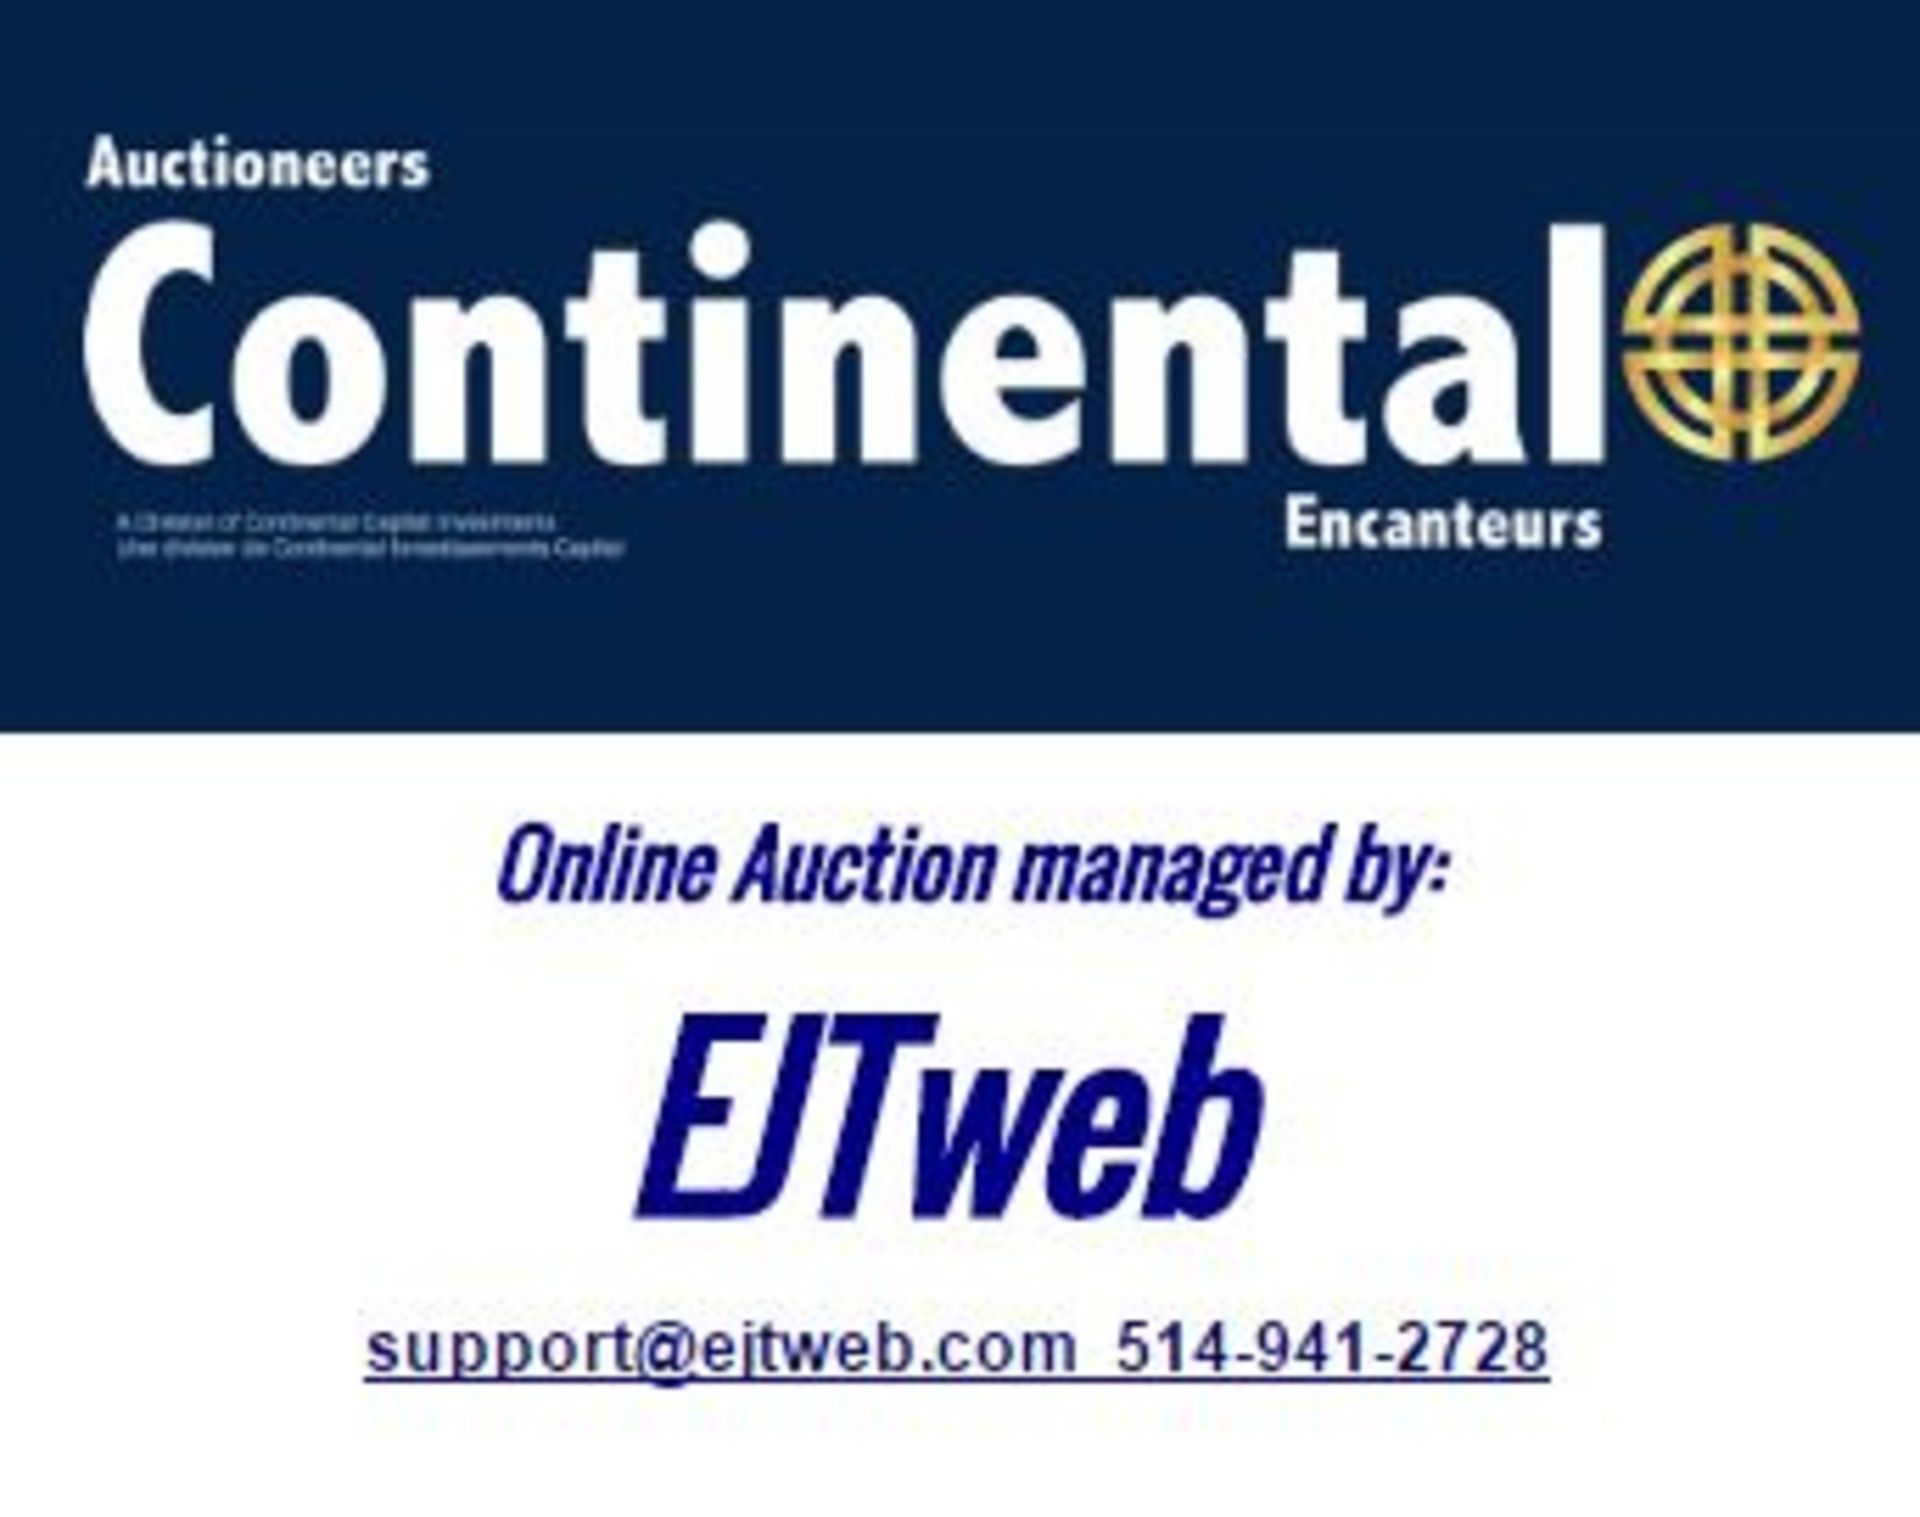 Online auction management provided by EJTweb.com support@ejtweb.com 514-941-2728 / 514-941-5628